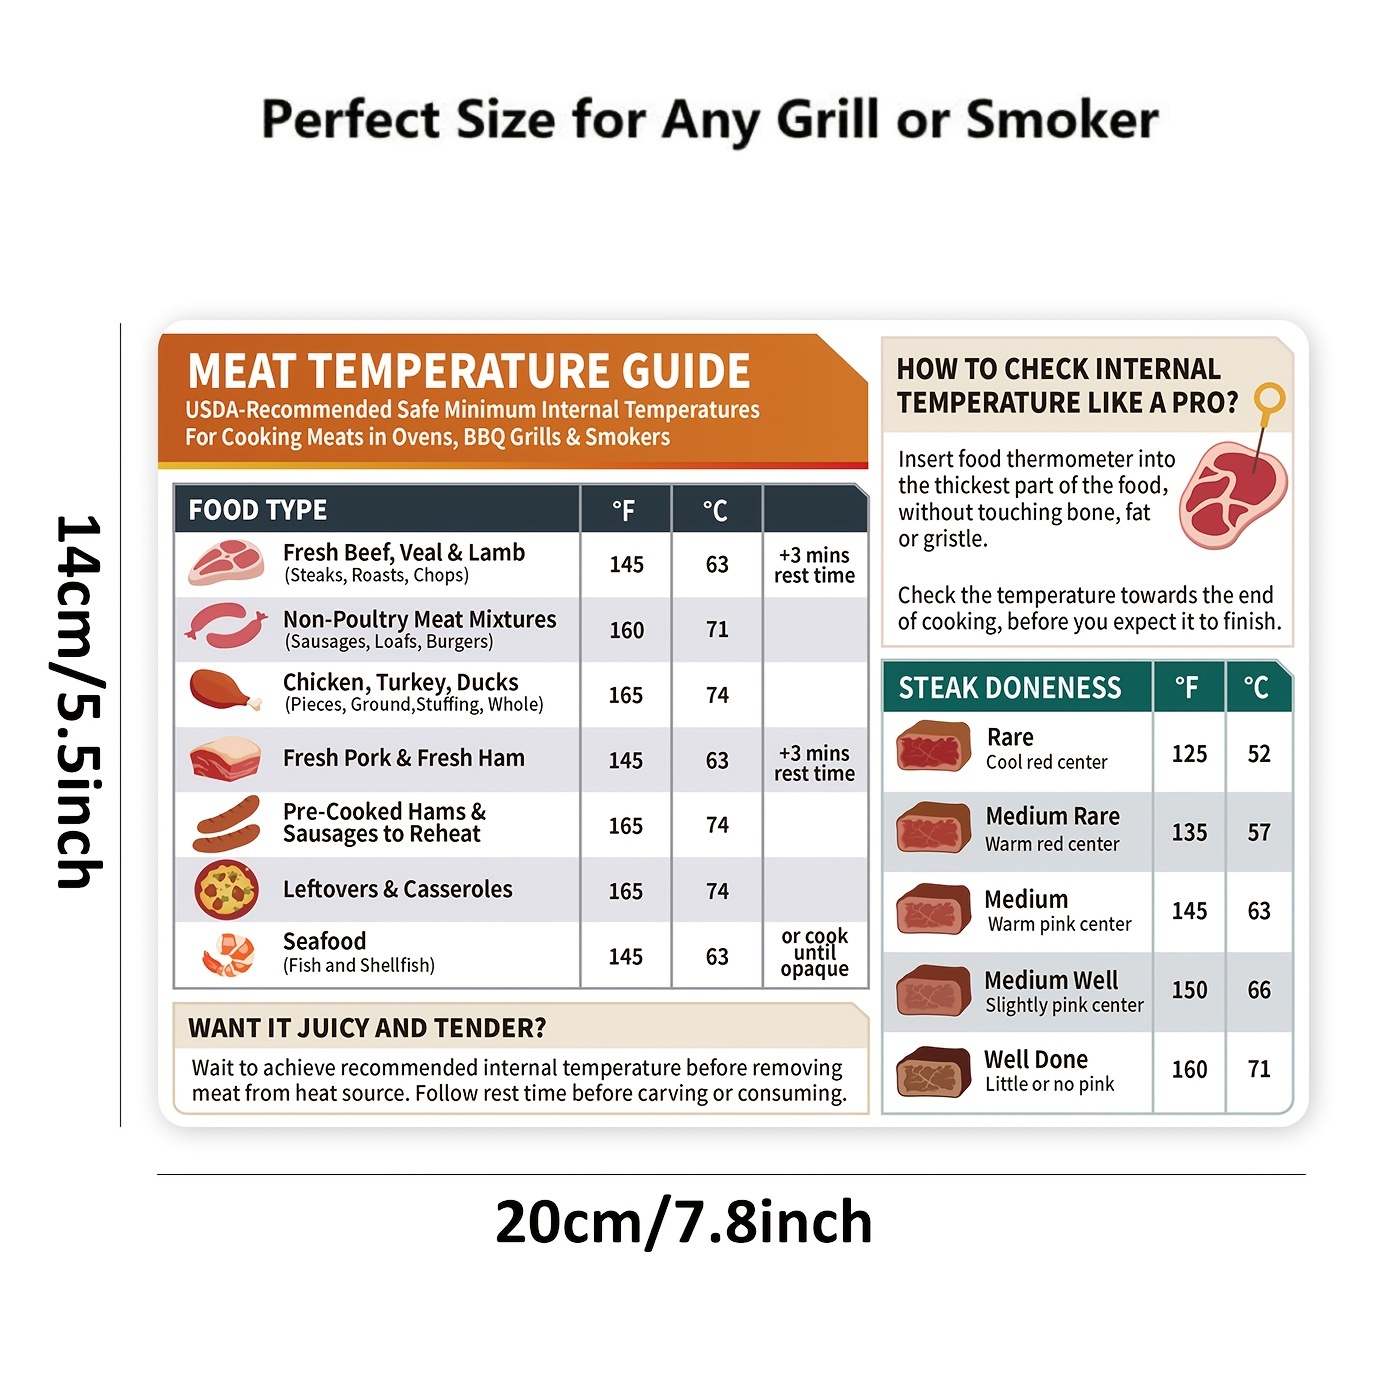 Steak Doneness Guide & Temperature Charts